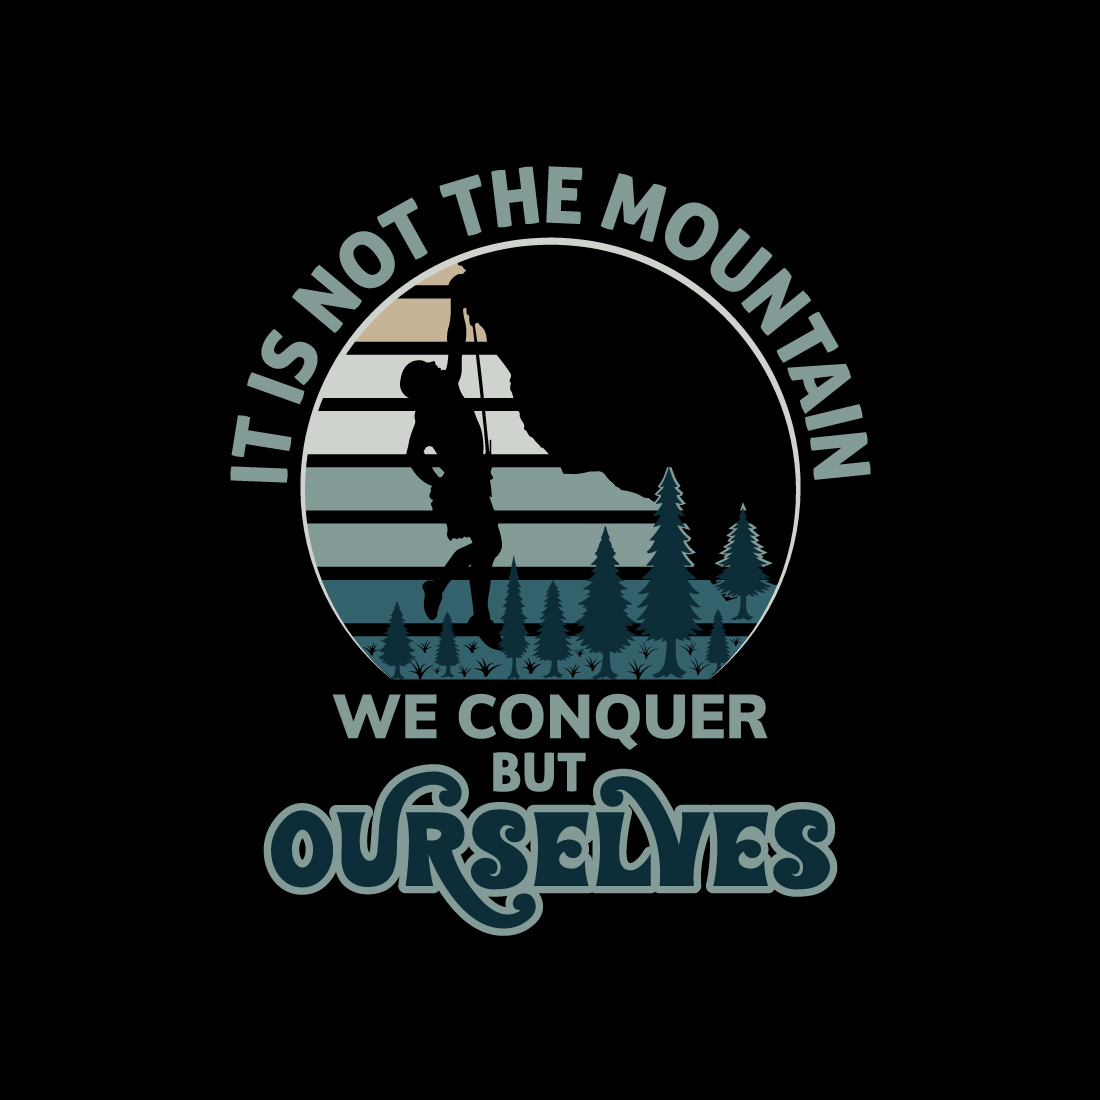 Vintage Mountain Hiking T-Shirt Design cover image.